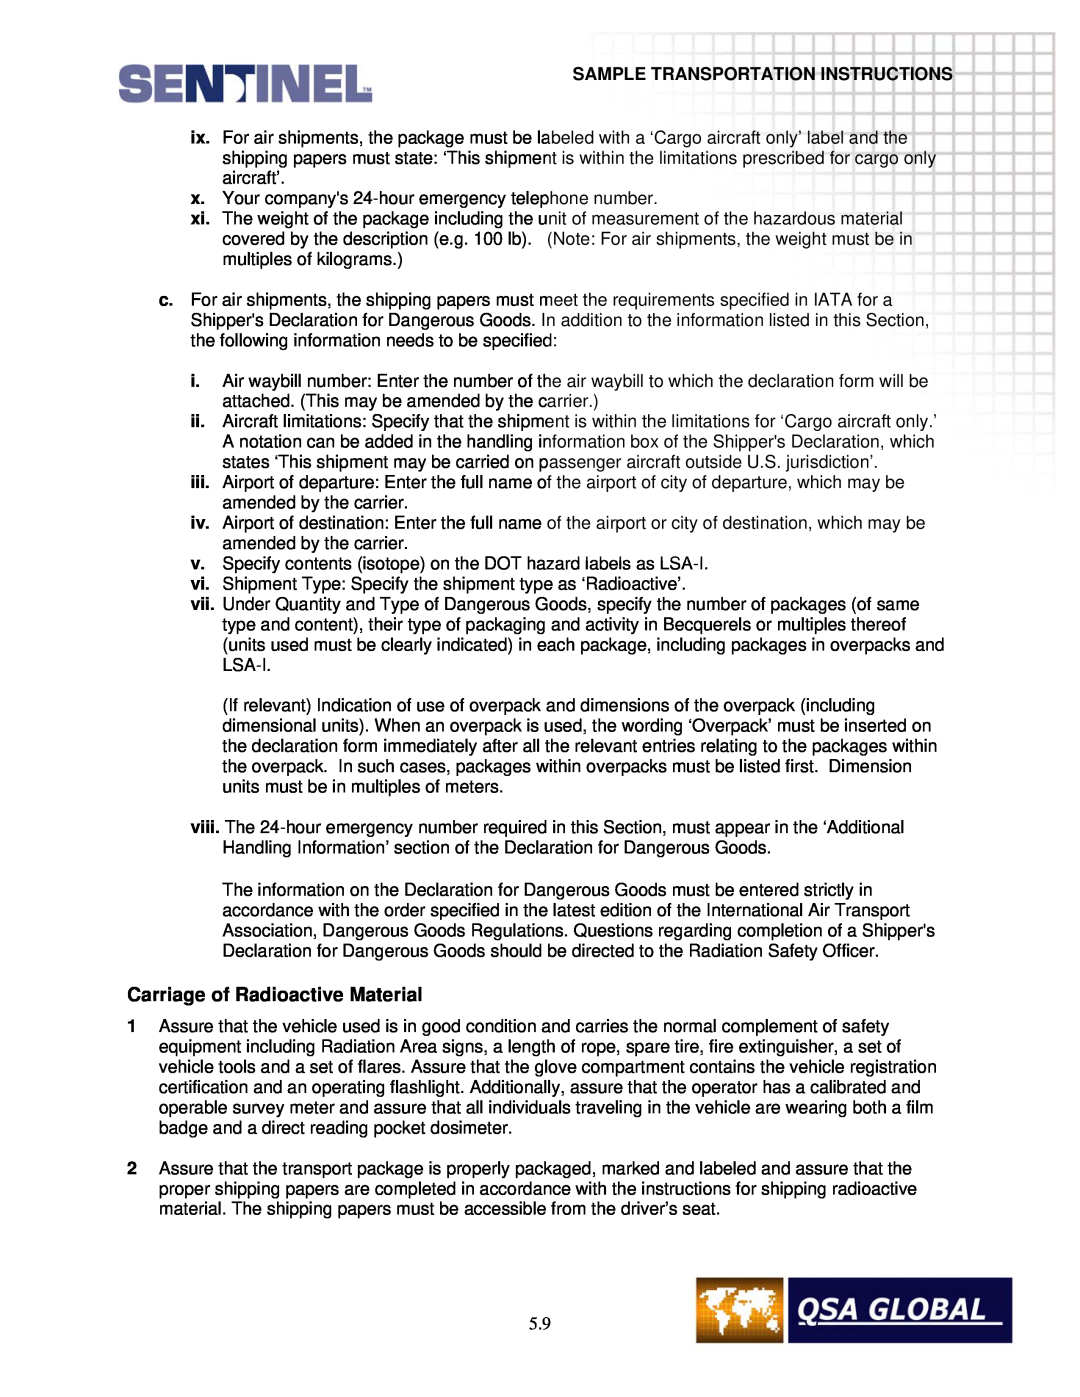 Sigma projetor manual Carriage of Radioactive Material, Sample Transportation Instructions 